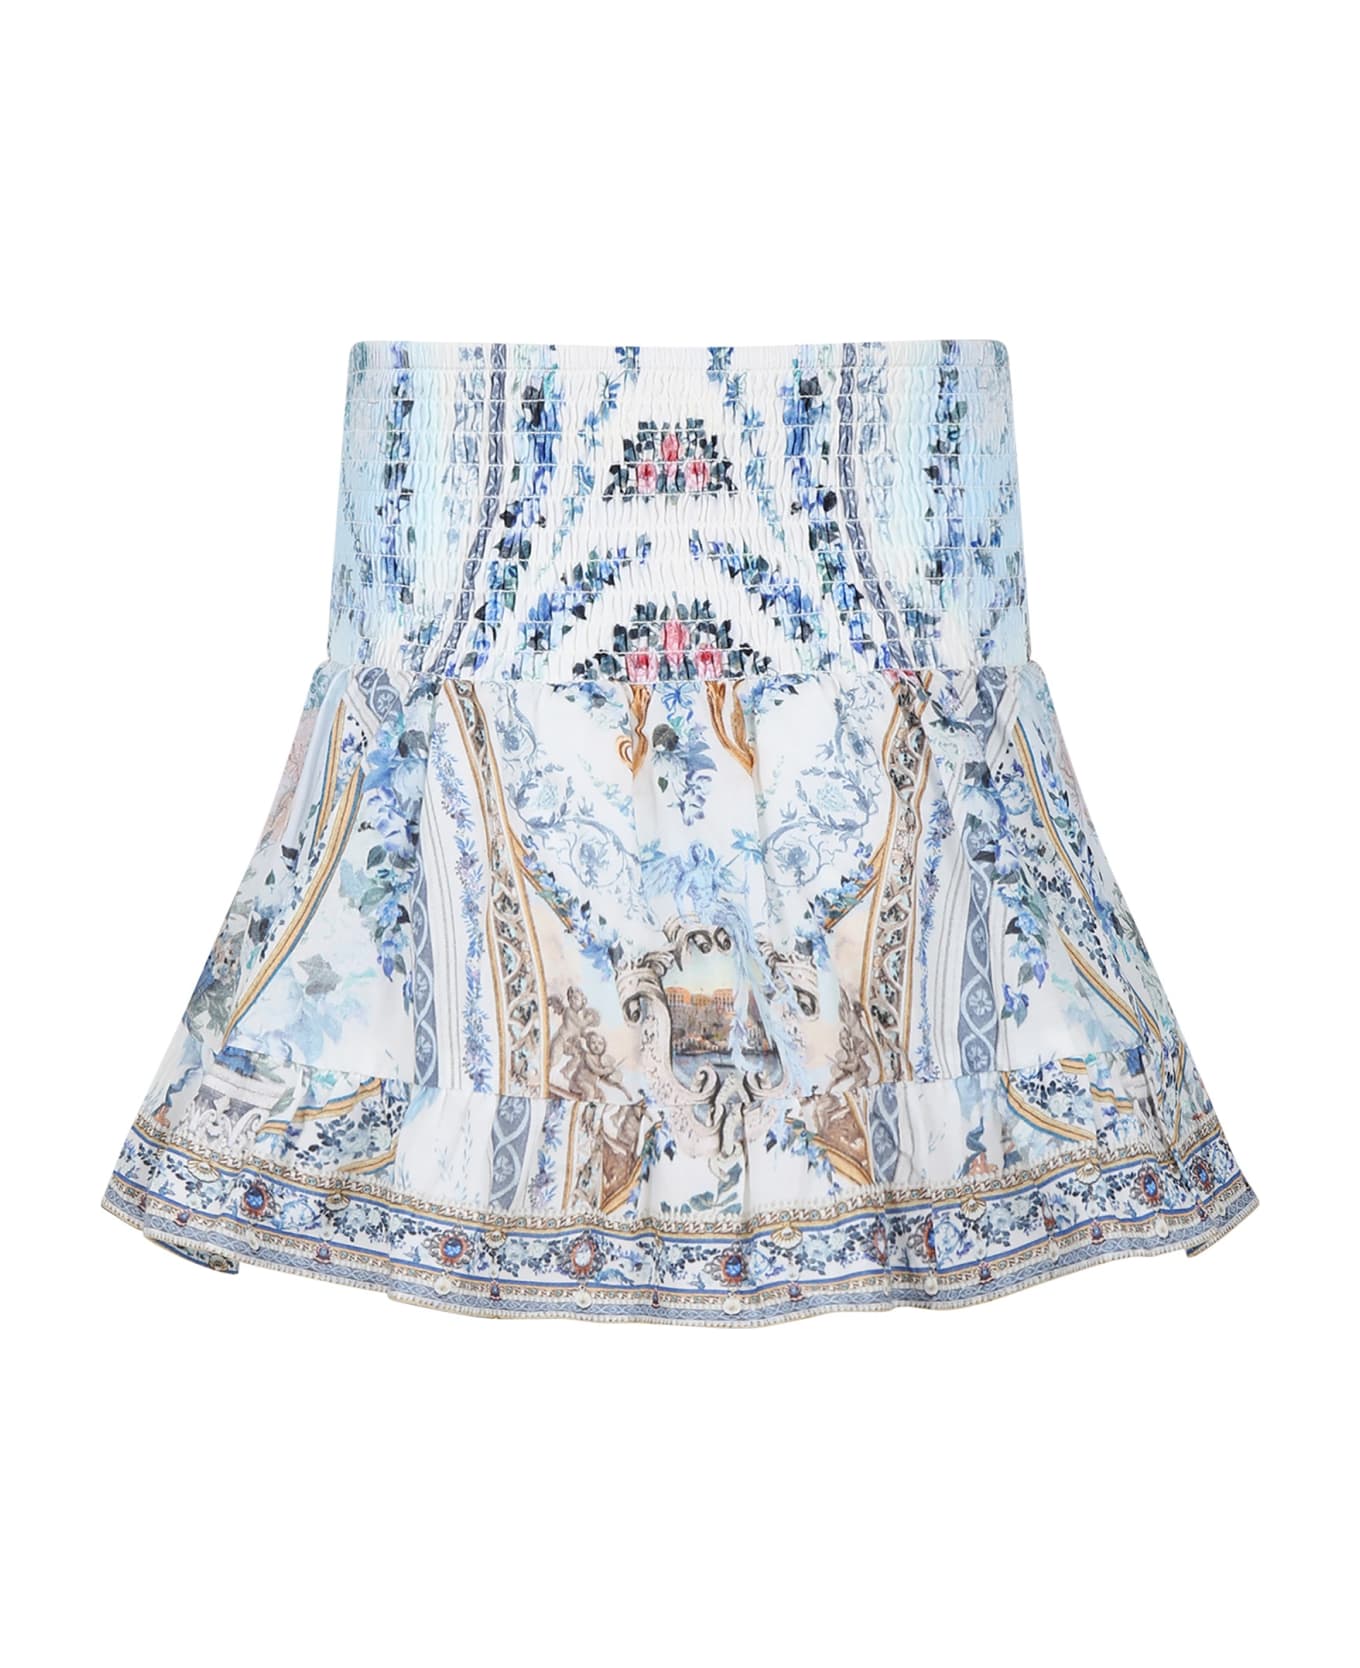 Camilla Light Blue Skirt For Girl With Floral Print - Light Blue